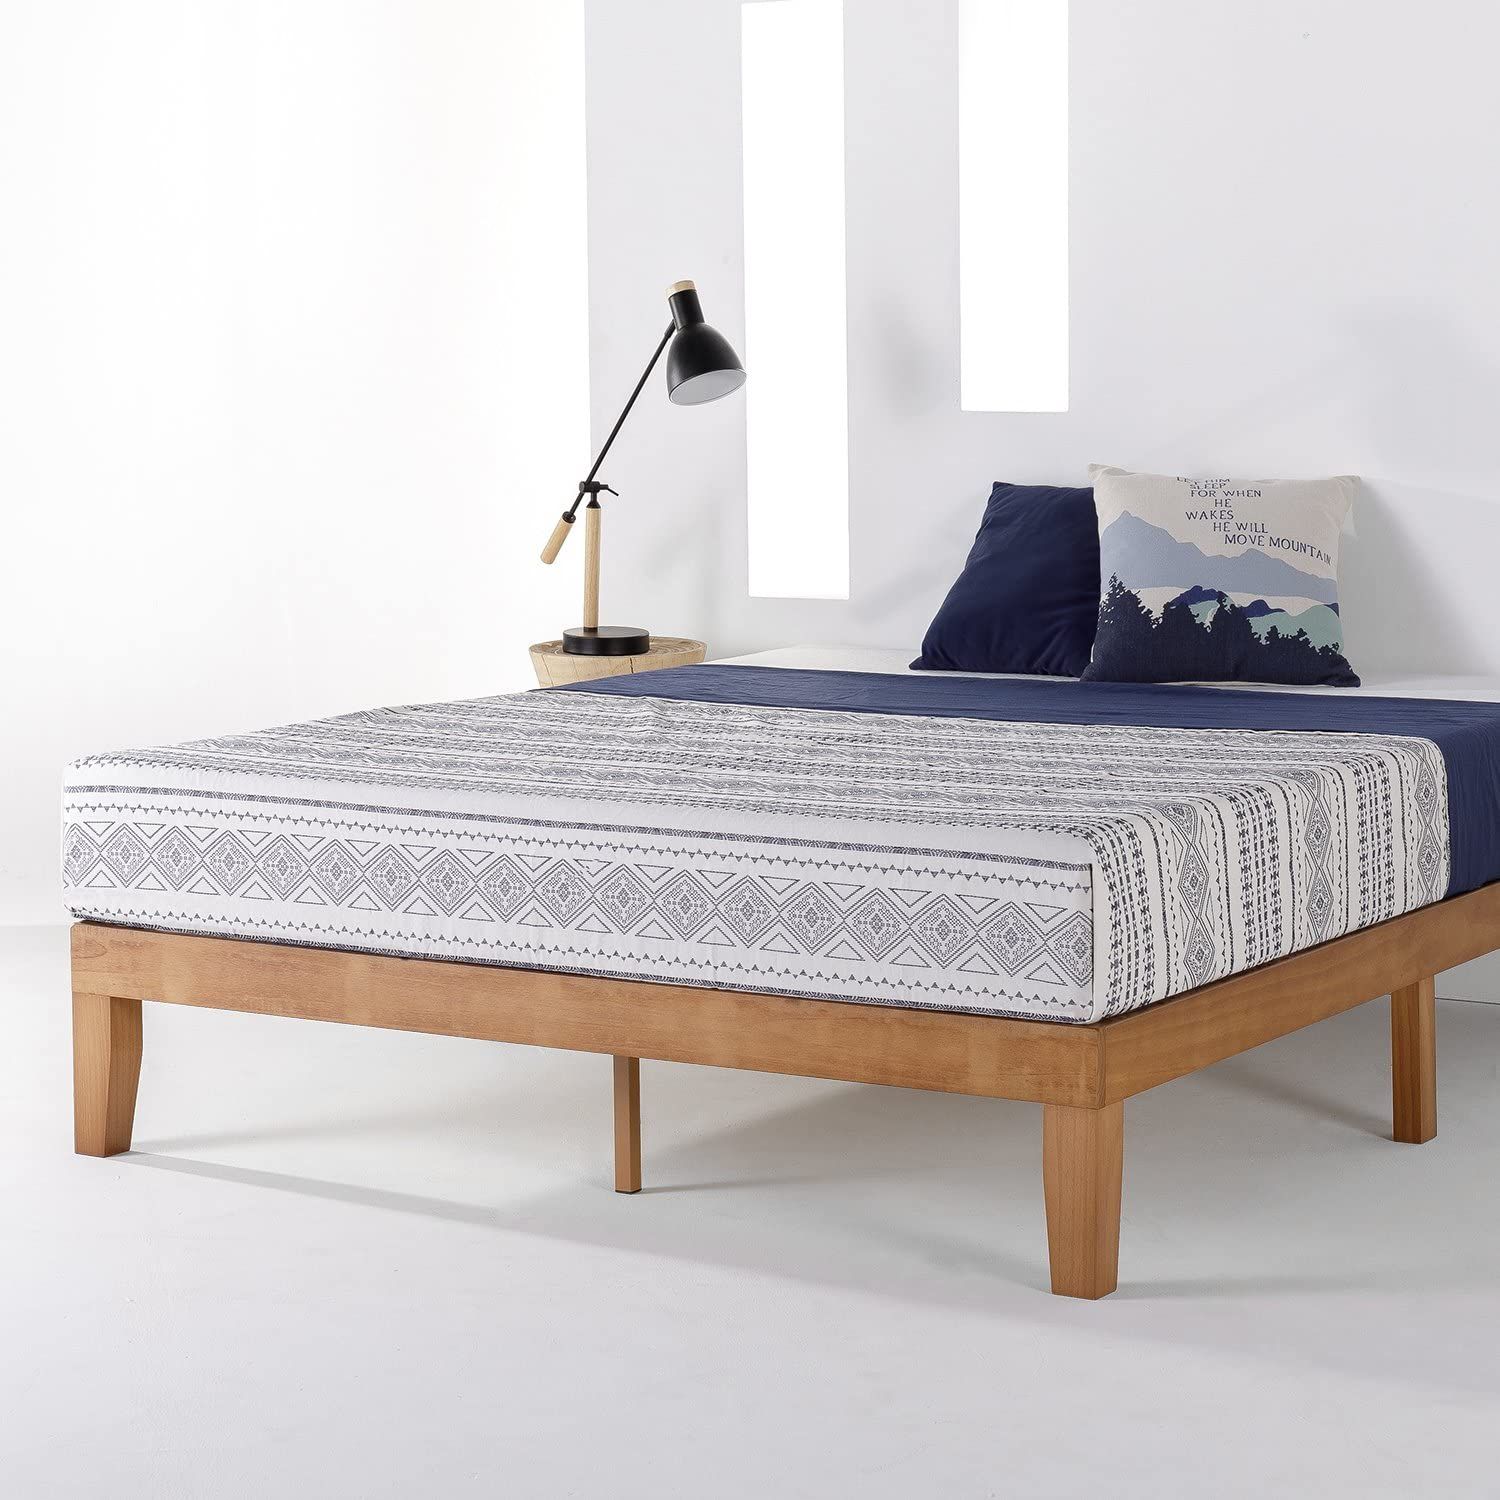 21 Best Platform Beds 2021 The Strategist, Low Profile Wooden Bed Frame Queen